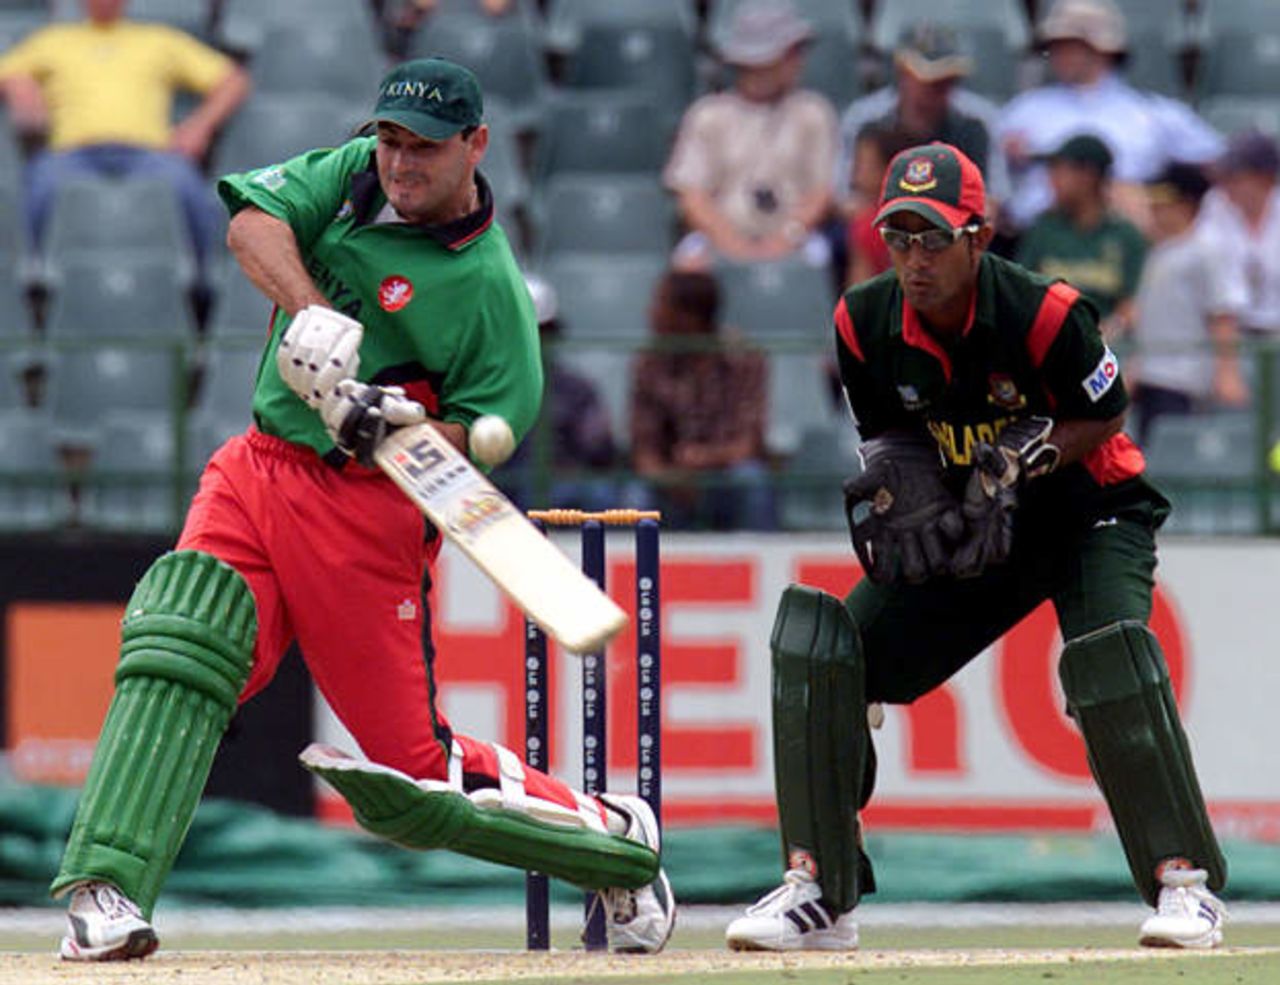 World Cup, 2003 - Bangladesh v Kenya at Johannesburg, 1st Match 2003